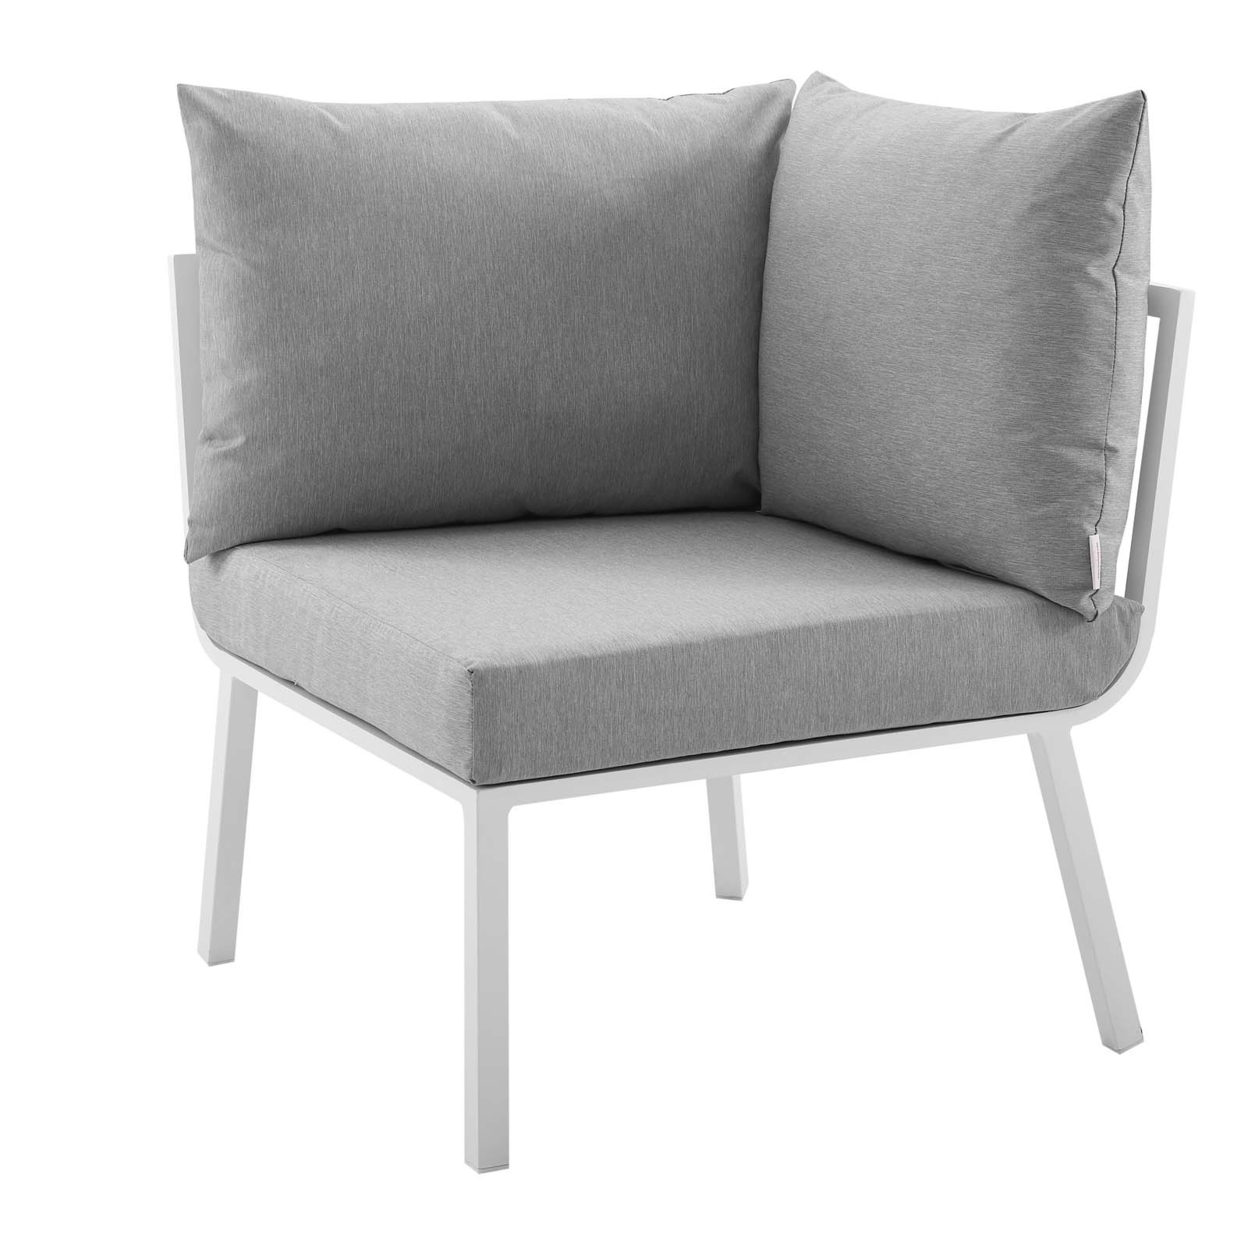 Riverside Outdoor Patio Aluminum Corner Chair,White Gray